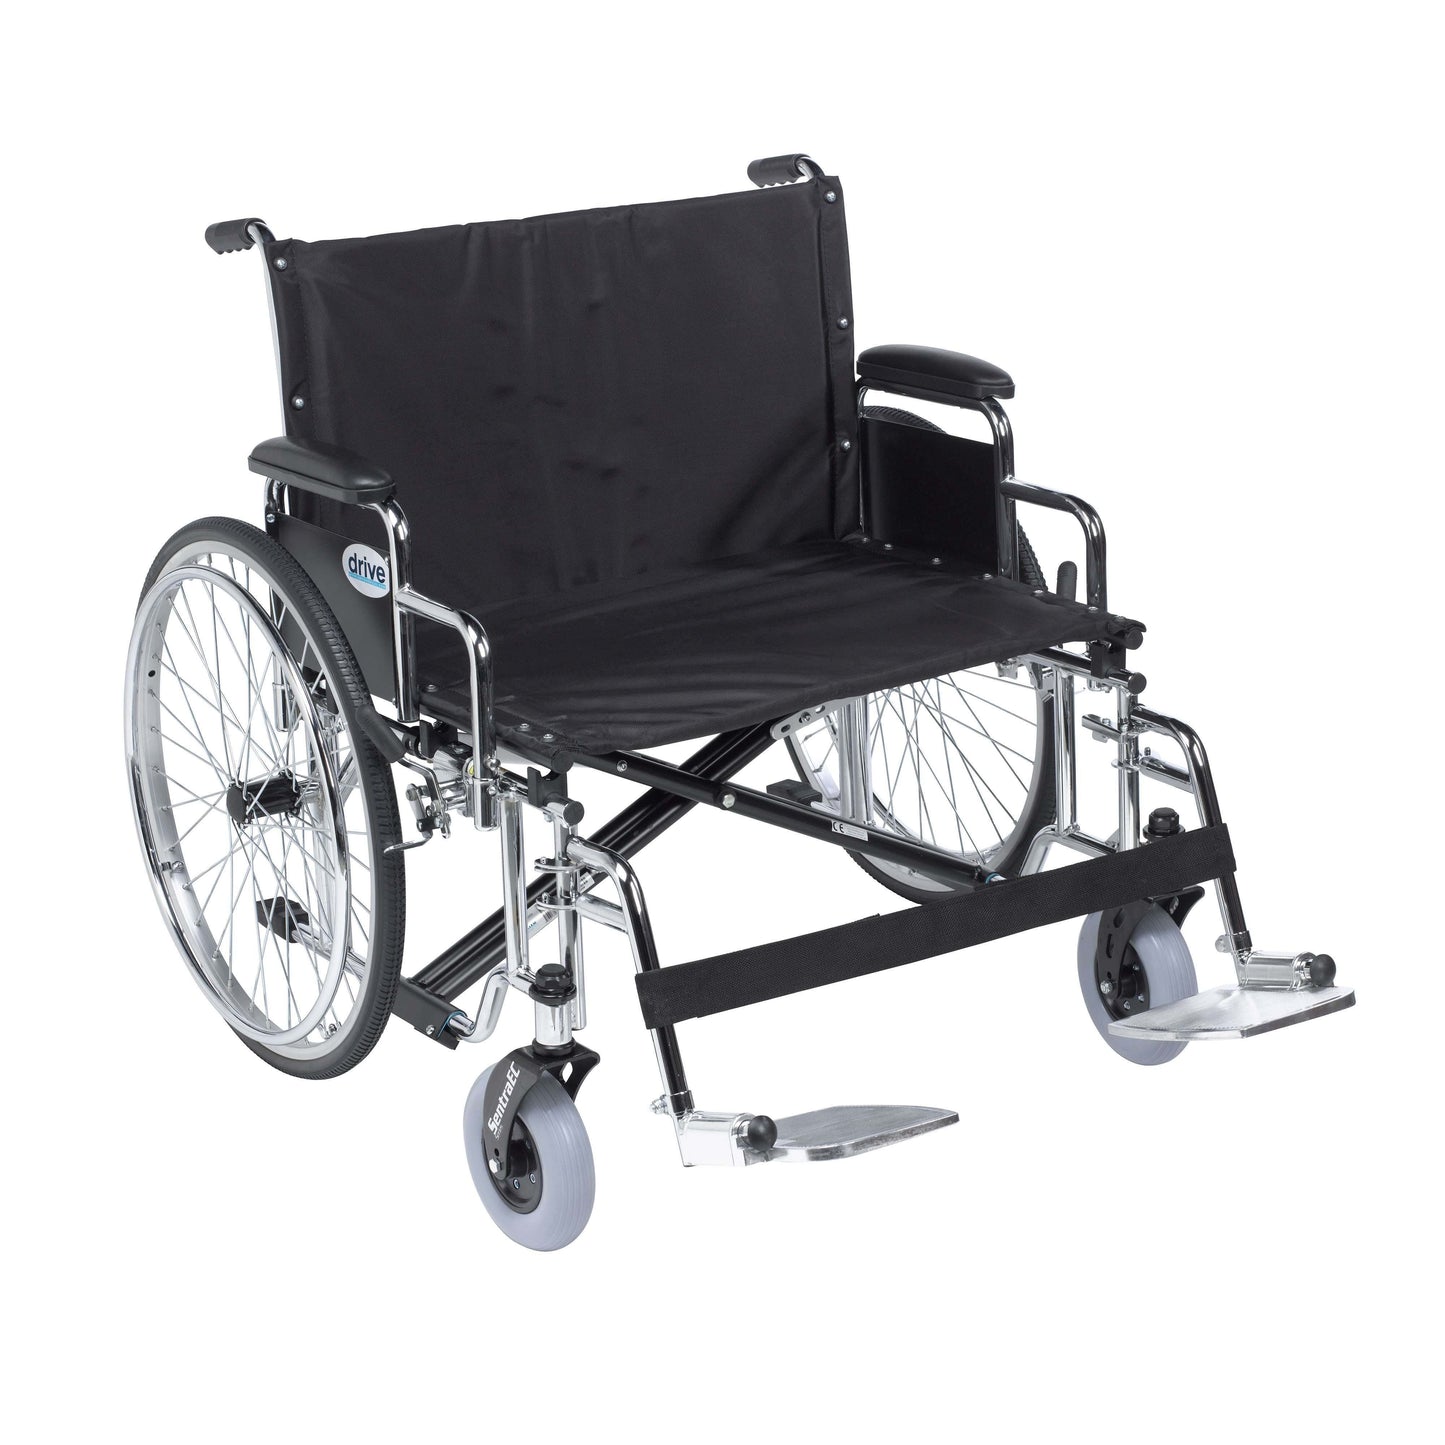 Drive std30ecdda-sf Sentra EC Heavy Duty Extra Wide Wheelchair, Detachable Desk Arms, Swing away Footrests, 30" Seat